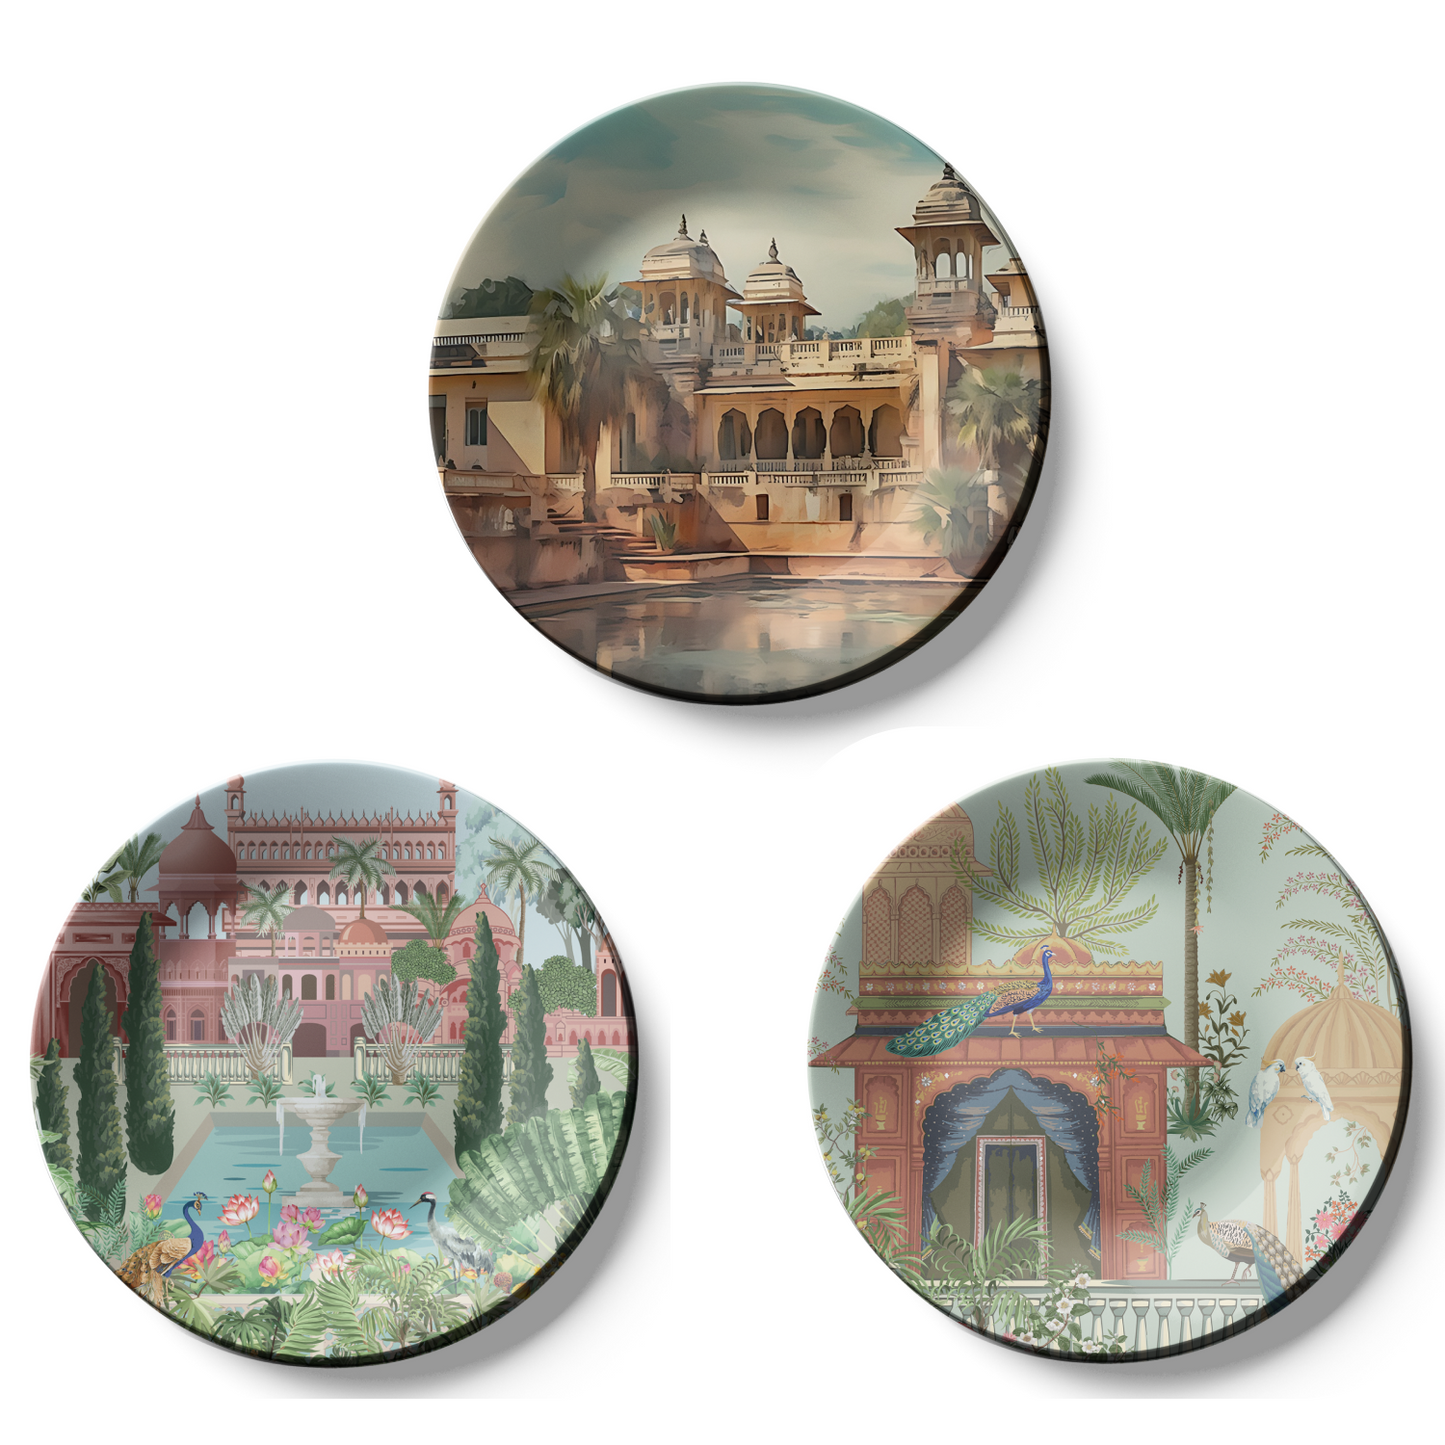 Artisanal Royal Garden and Building Wall Plates Décor Collection 